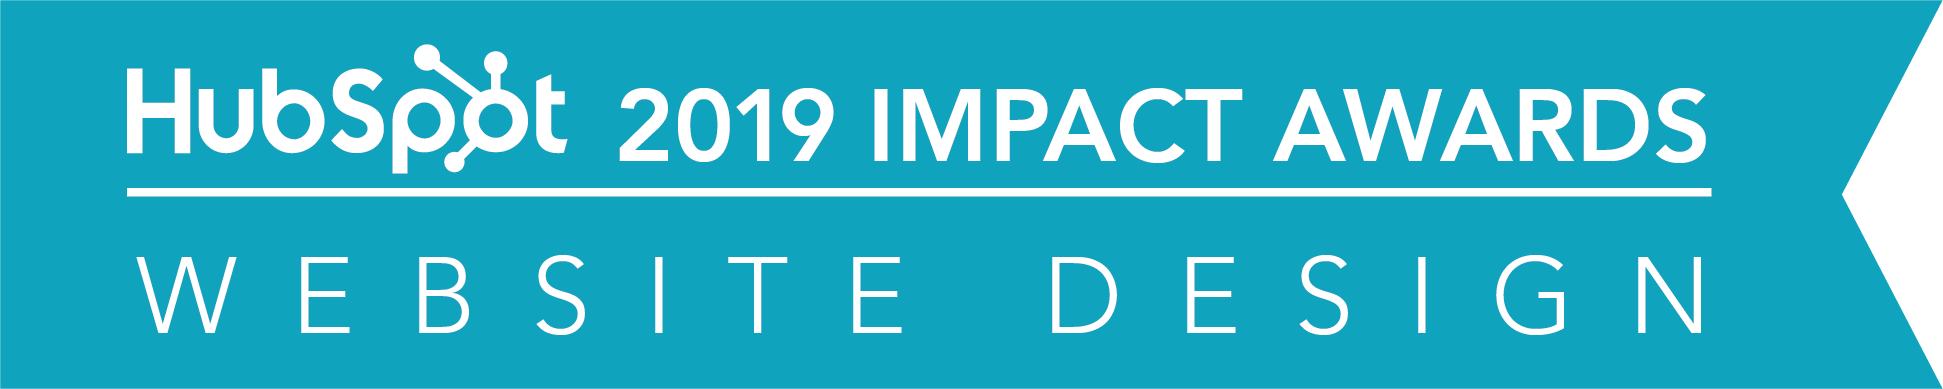 Hubspot Impact Awards 2019 Website Design